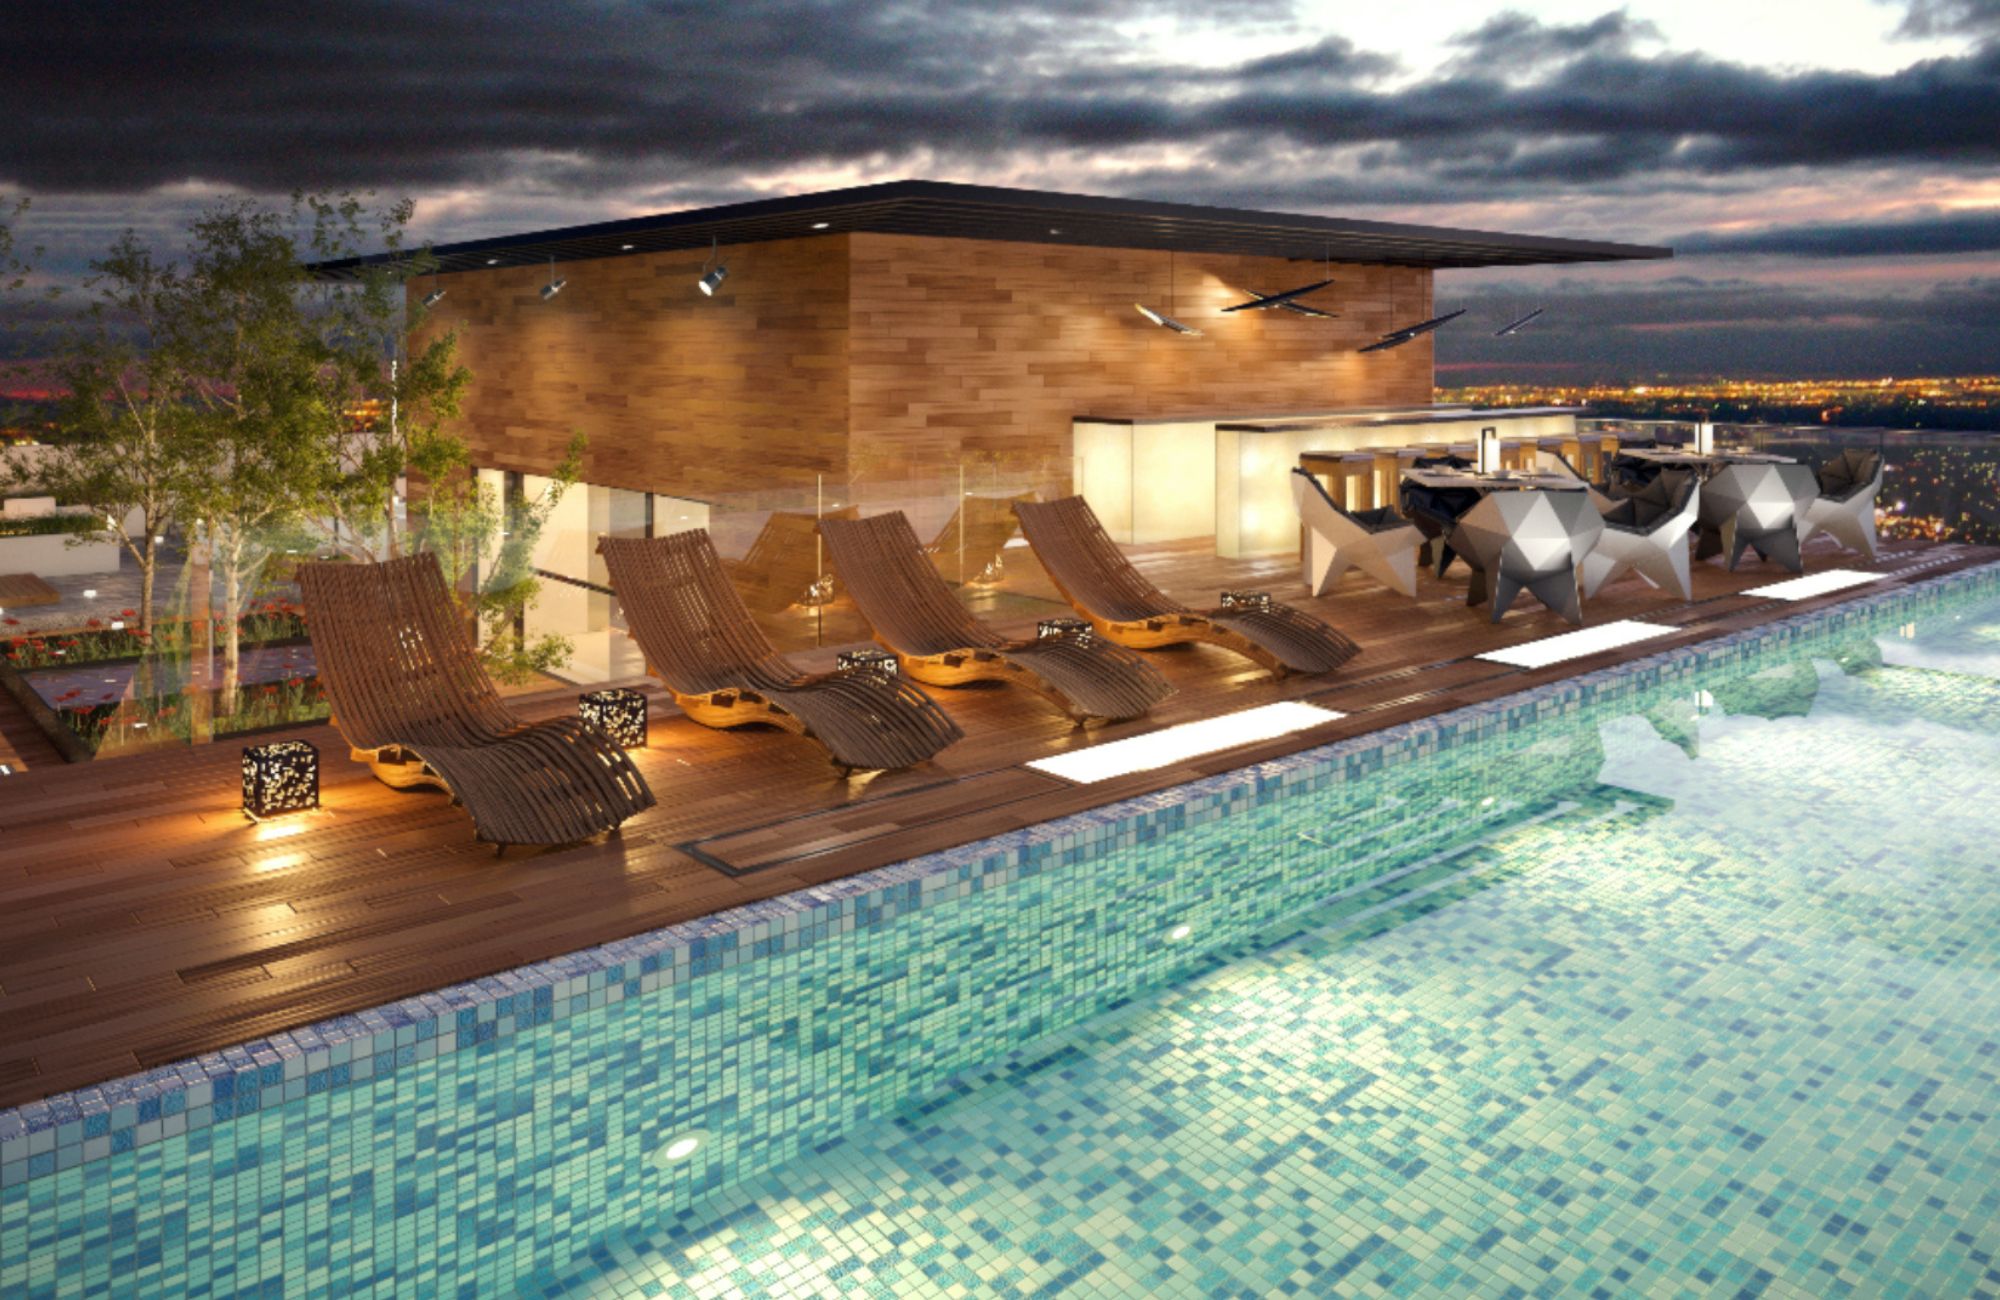 Condominio de doble terraza, piscina, pet friendly, spa en venta, Bosque Real